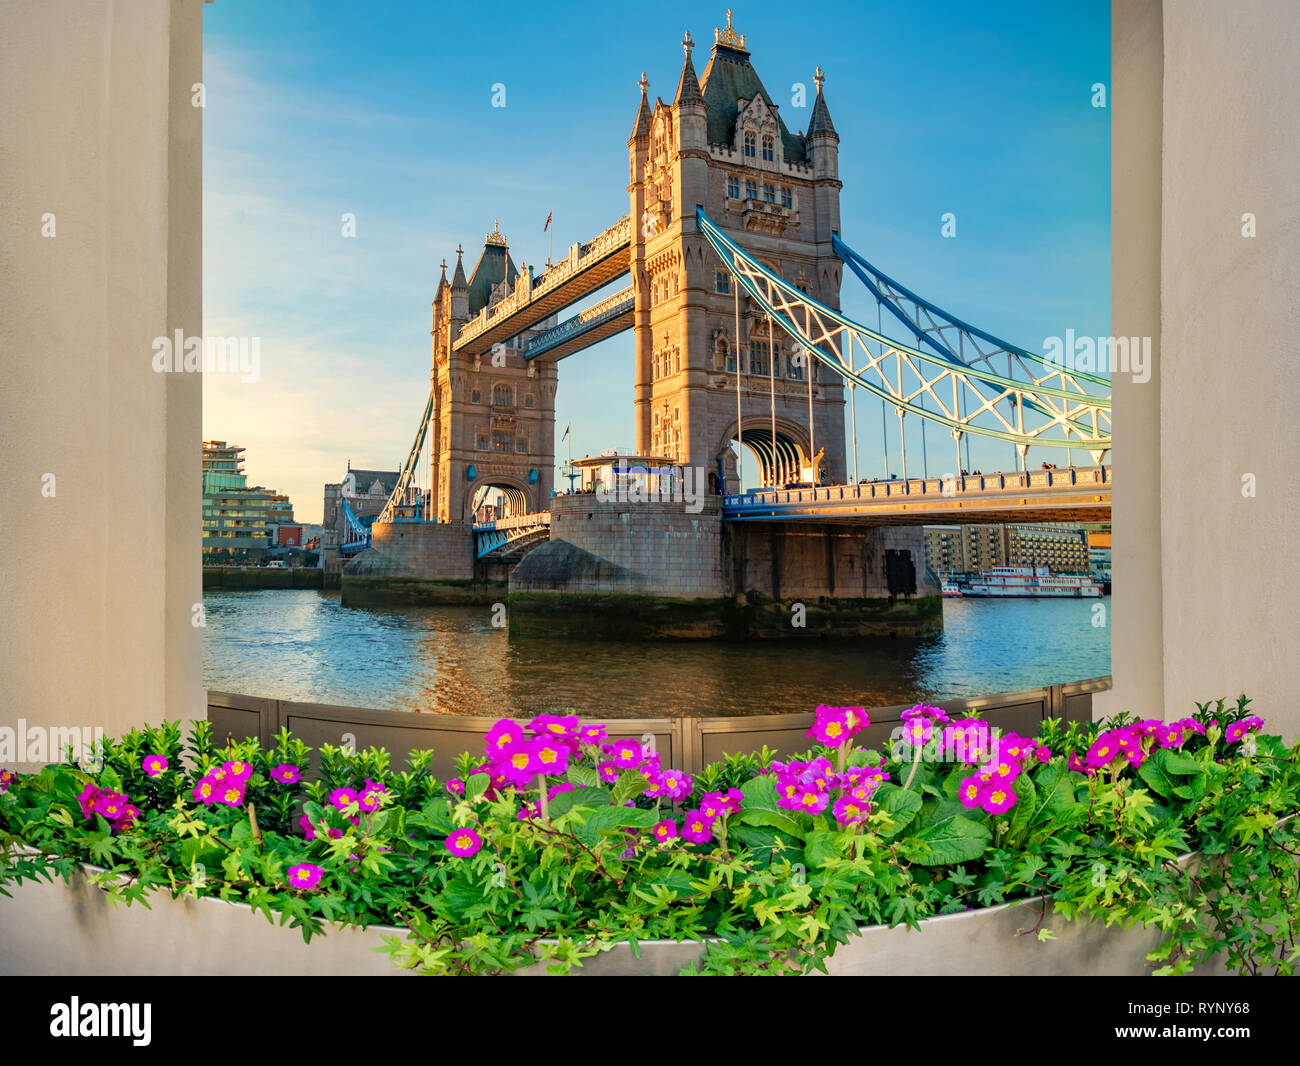 Famosos de Londres, Tower Bridge, vista a través de una ventana rodeada de flores en inglaterra - REINO UNIDO Foto de stock